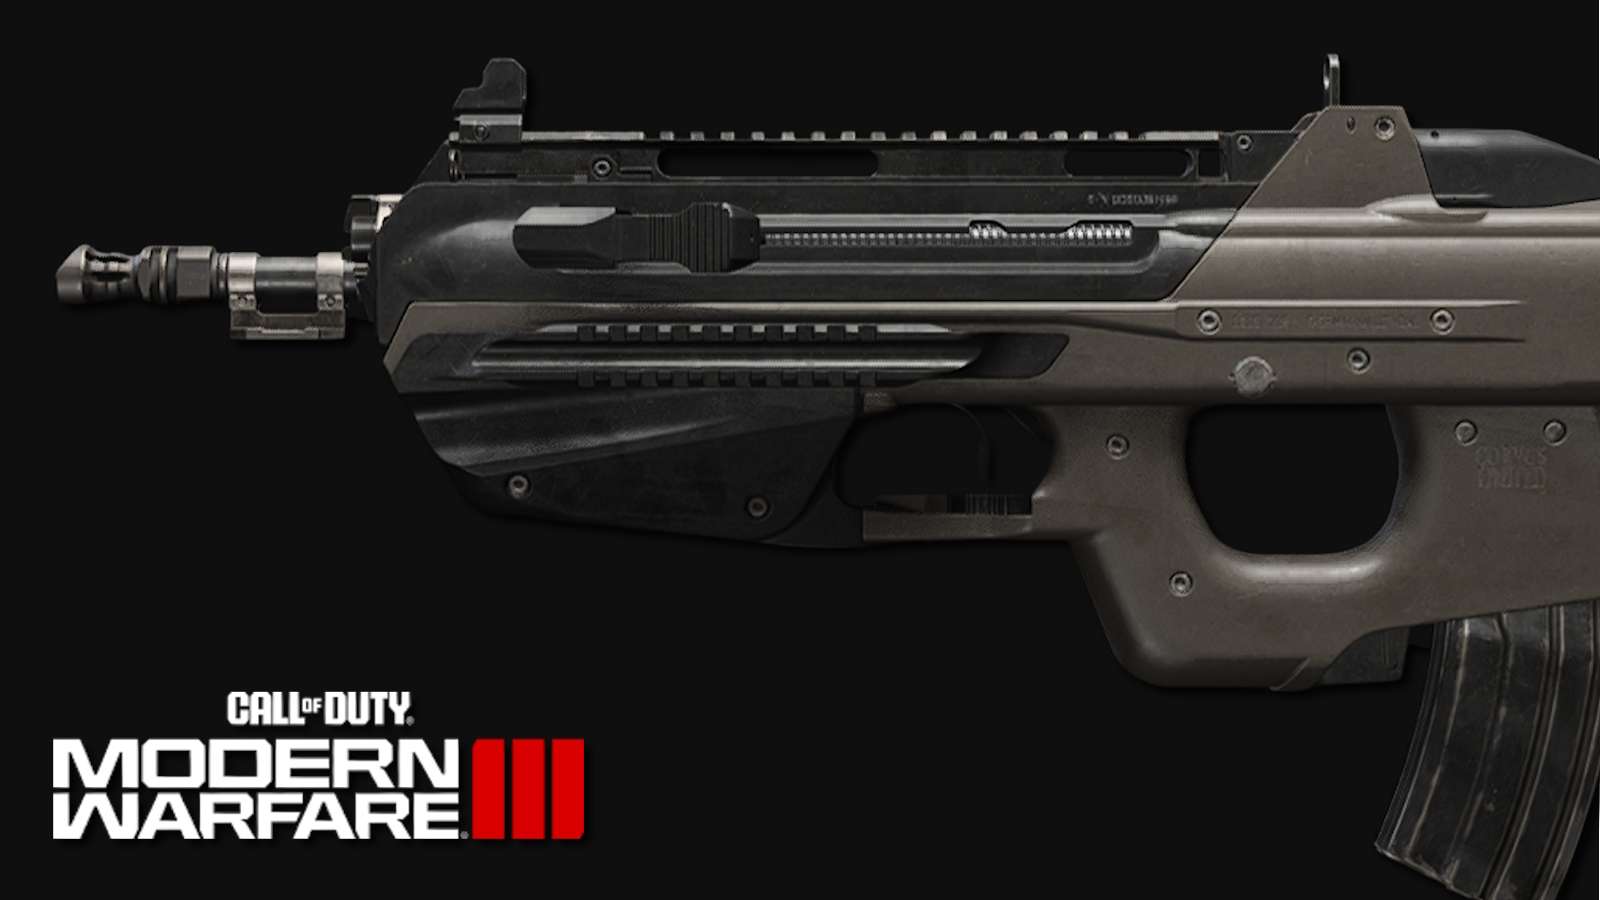 The BP50 assault rifle in Modern Warfare 3.